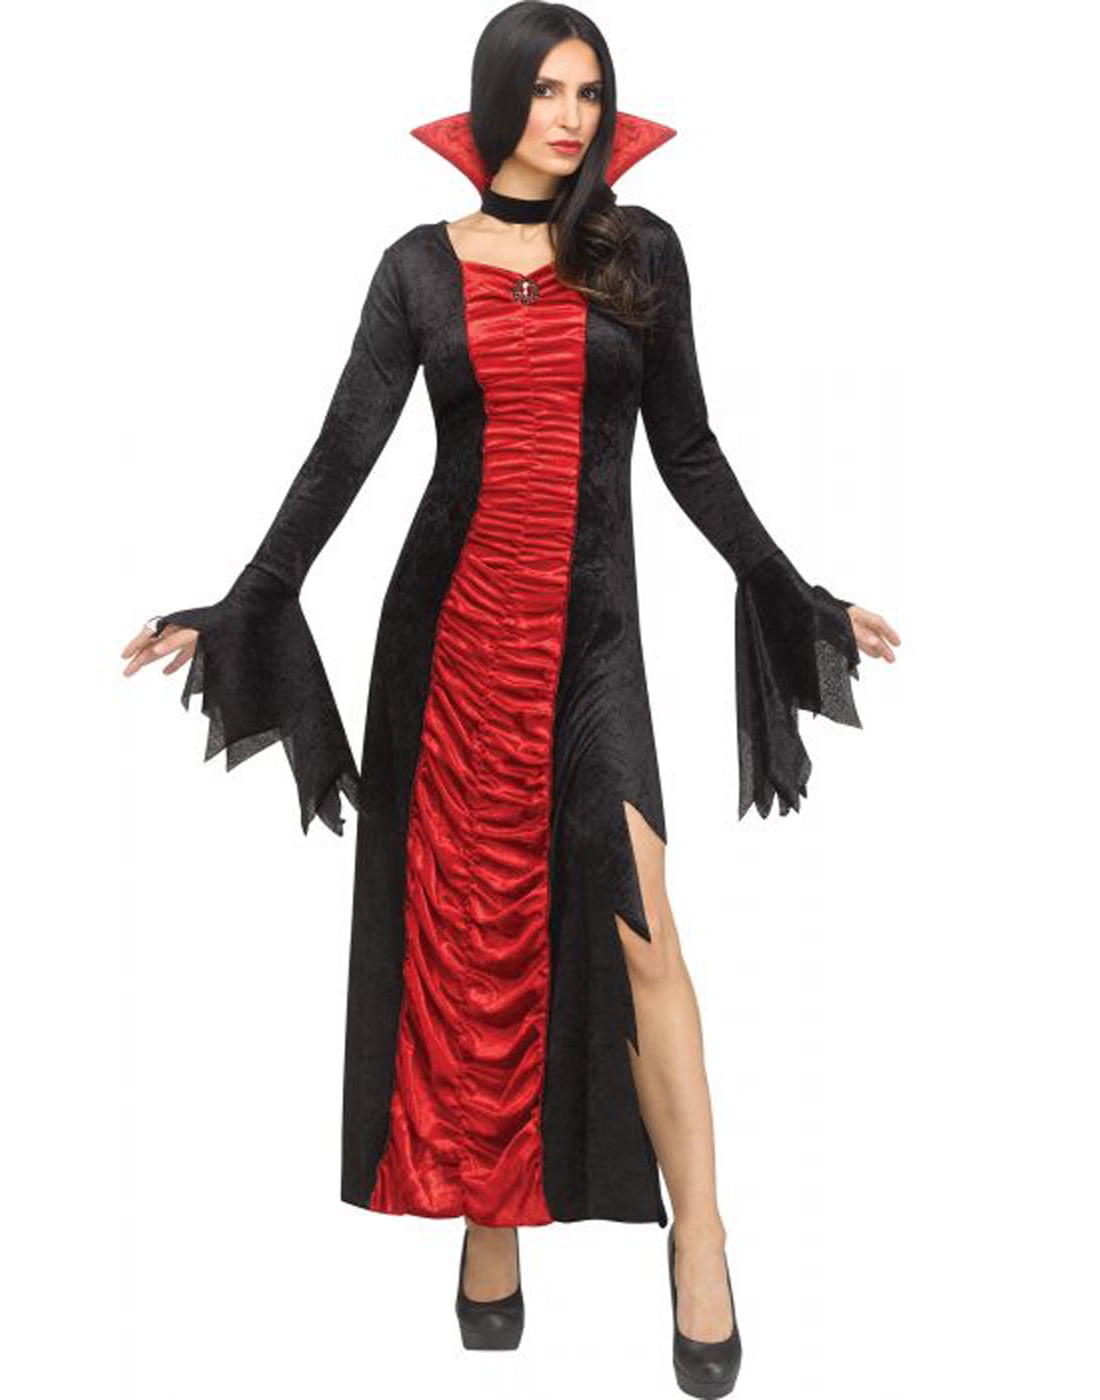 EraSpooky Girl’s Vampire Costume Halloween Gothic Dress Victorian Vampiress Bat